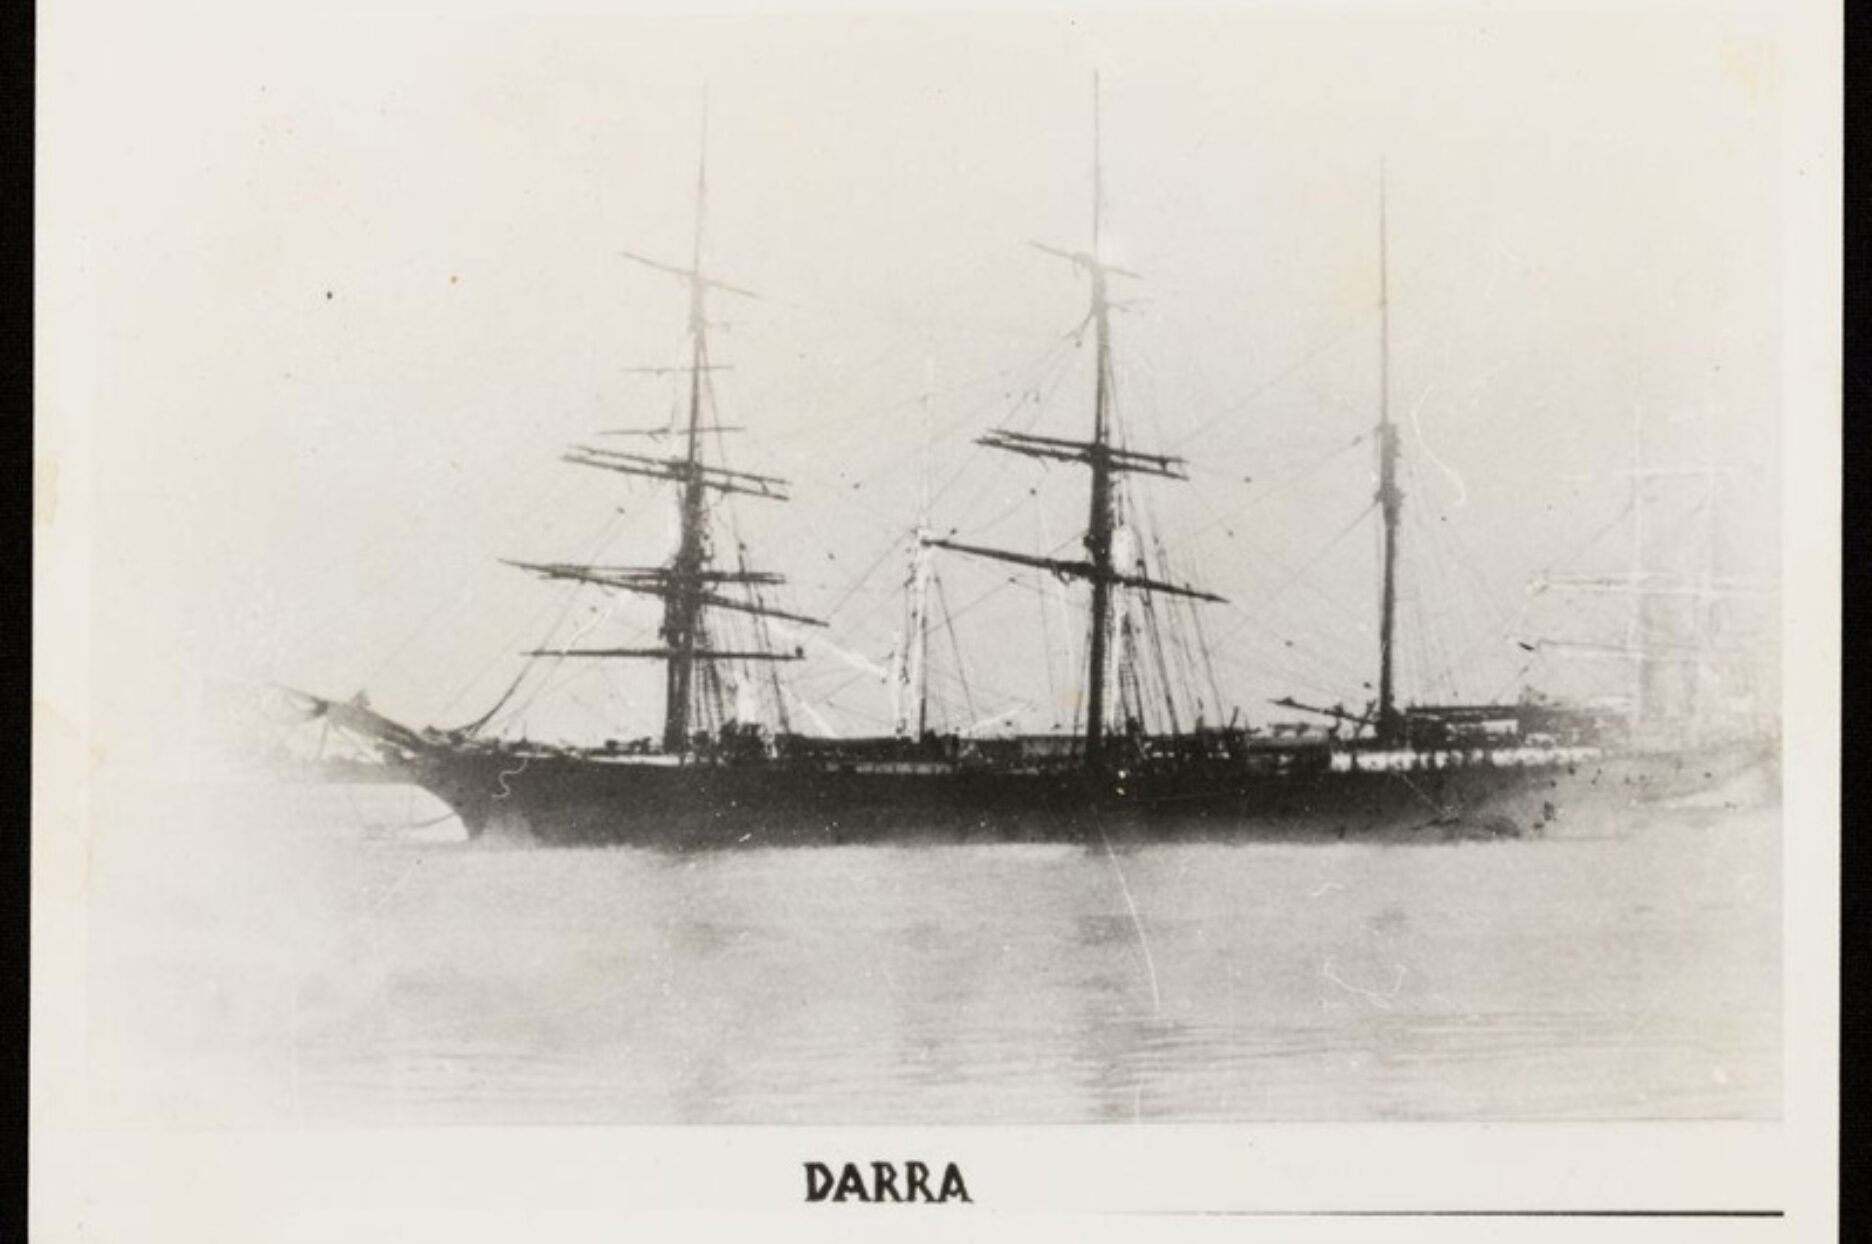 The darra